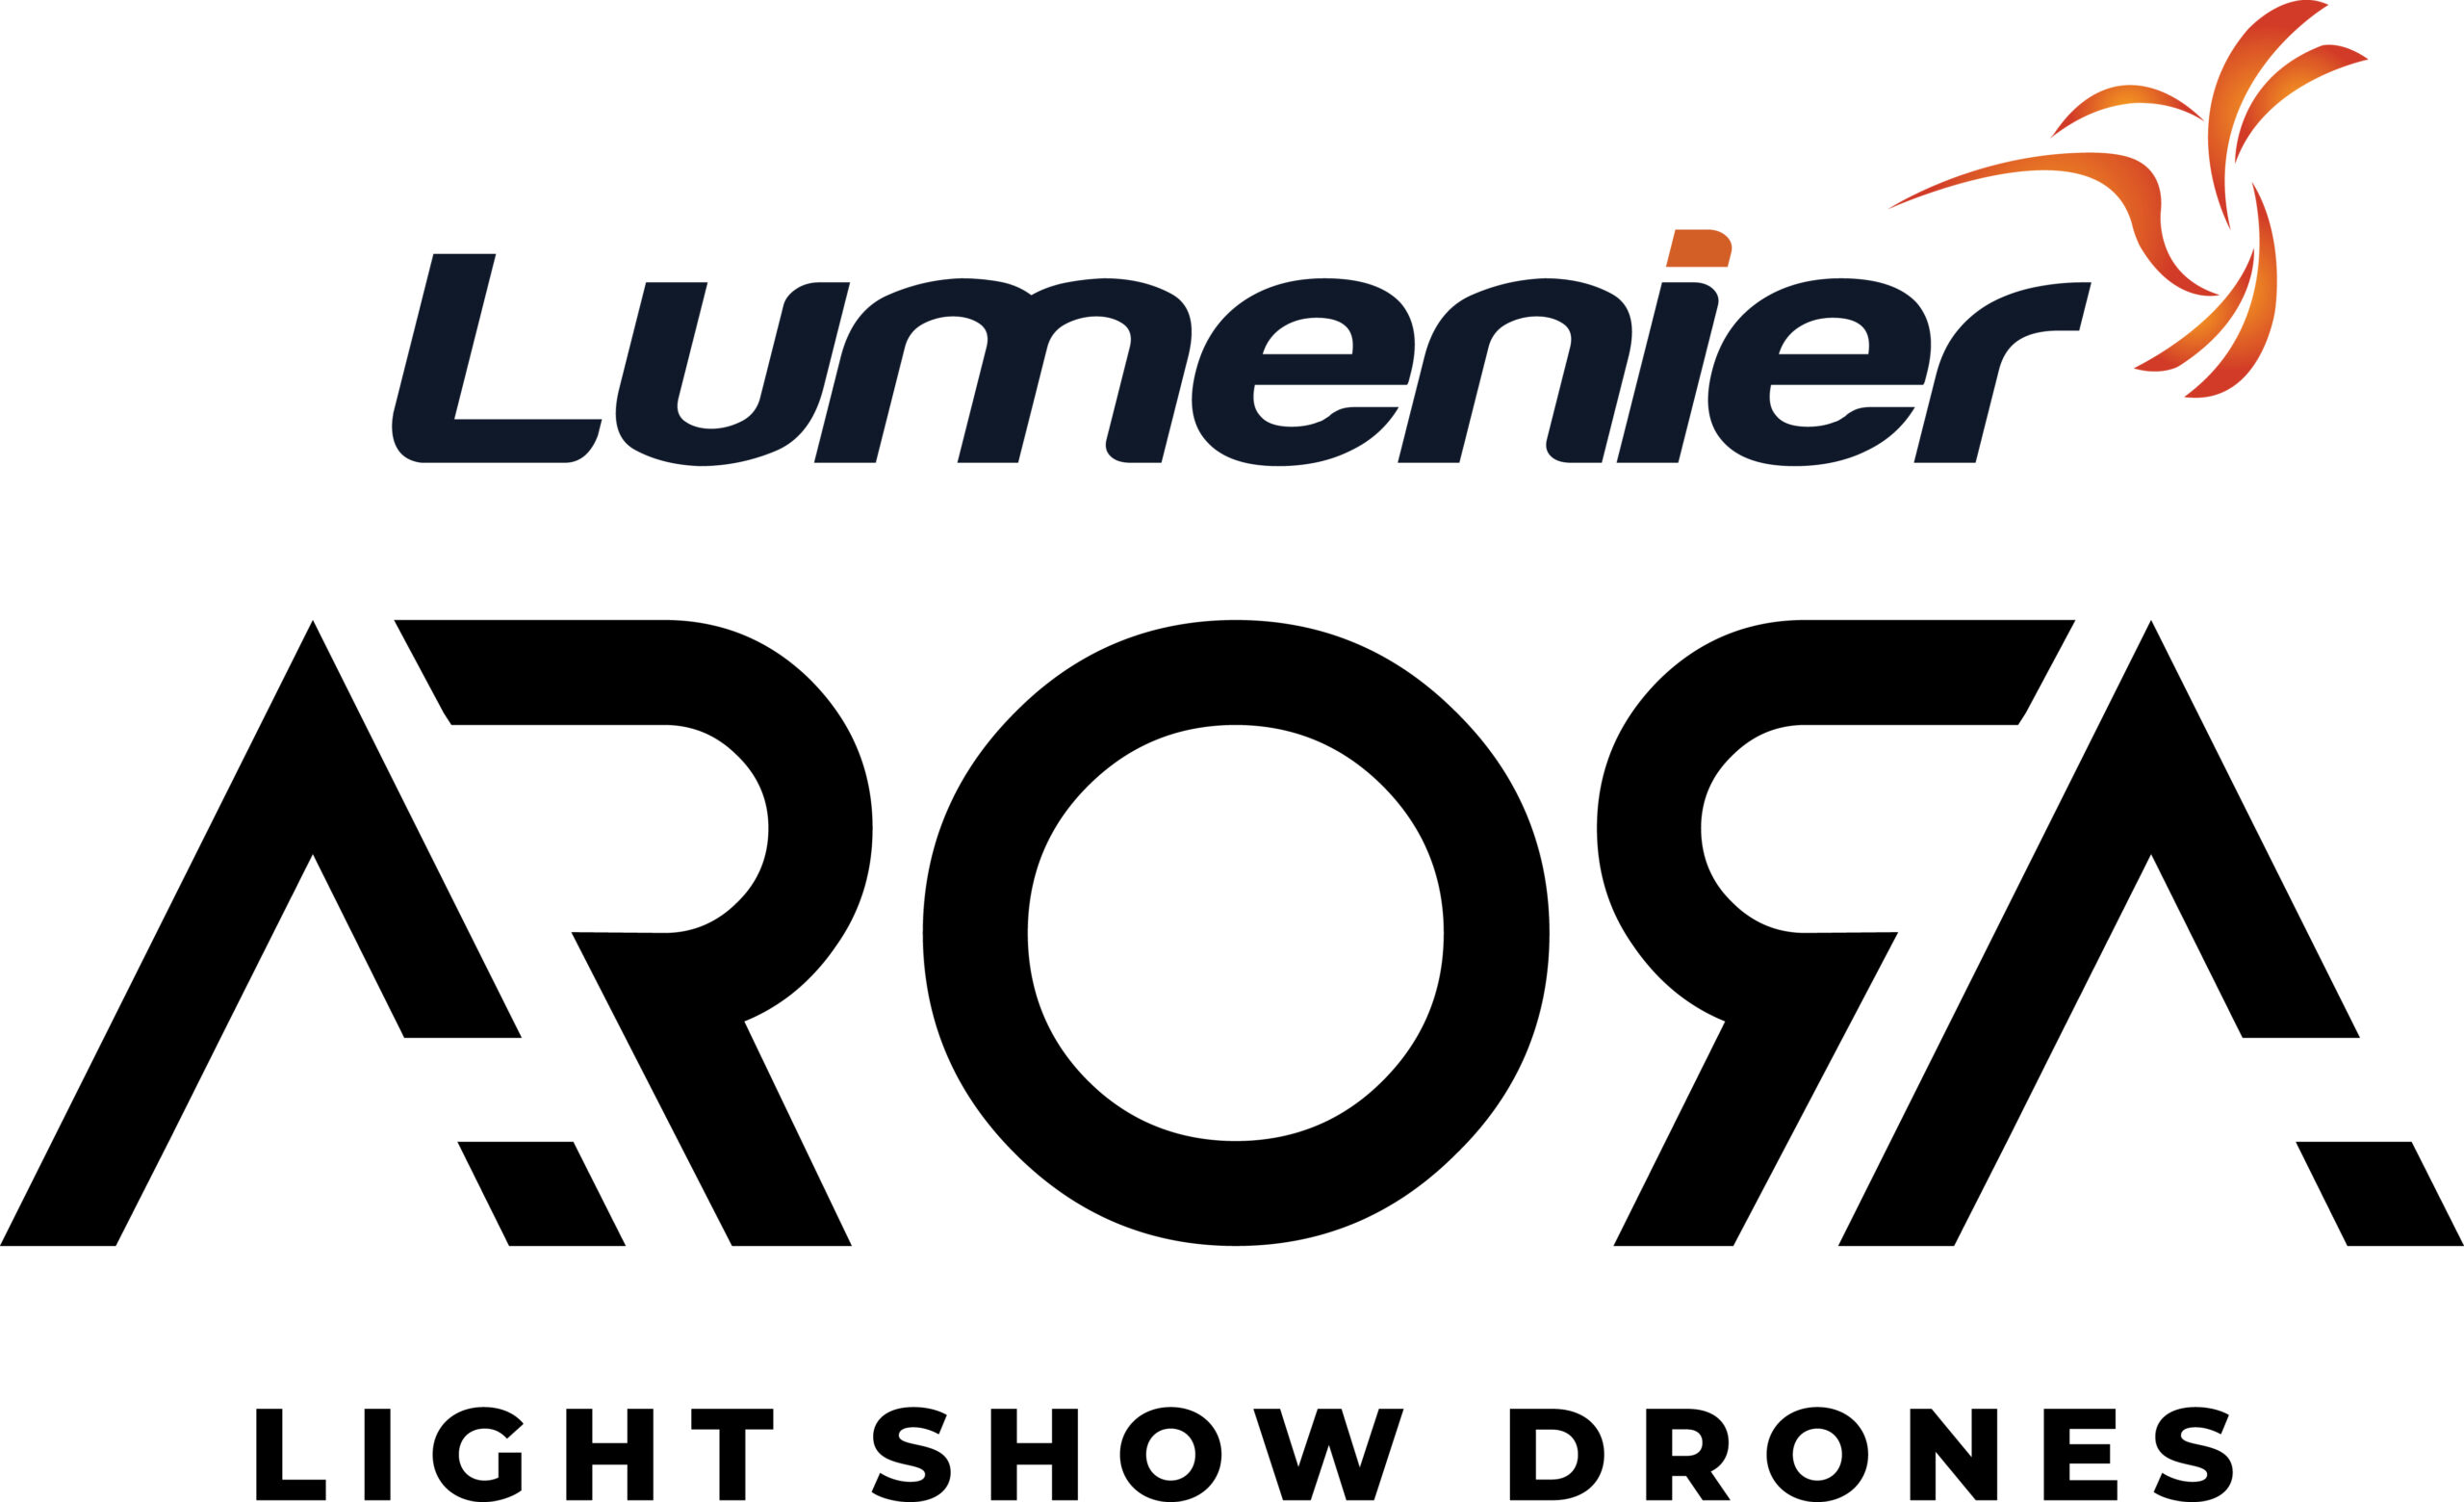 Lumenier Arora Light Show Drone